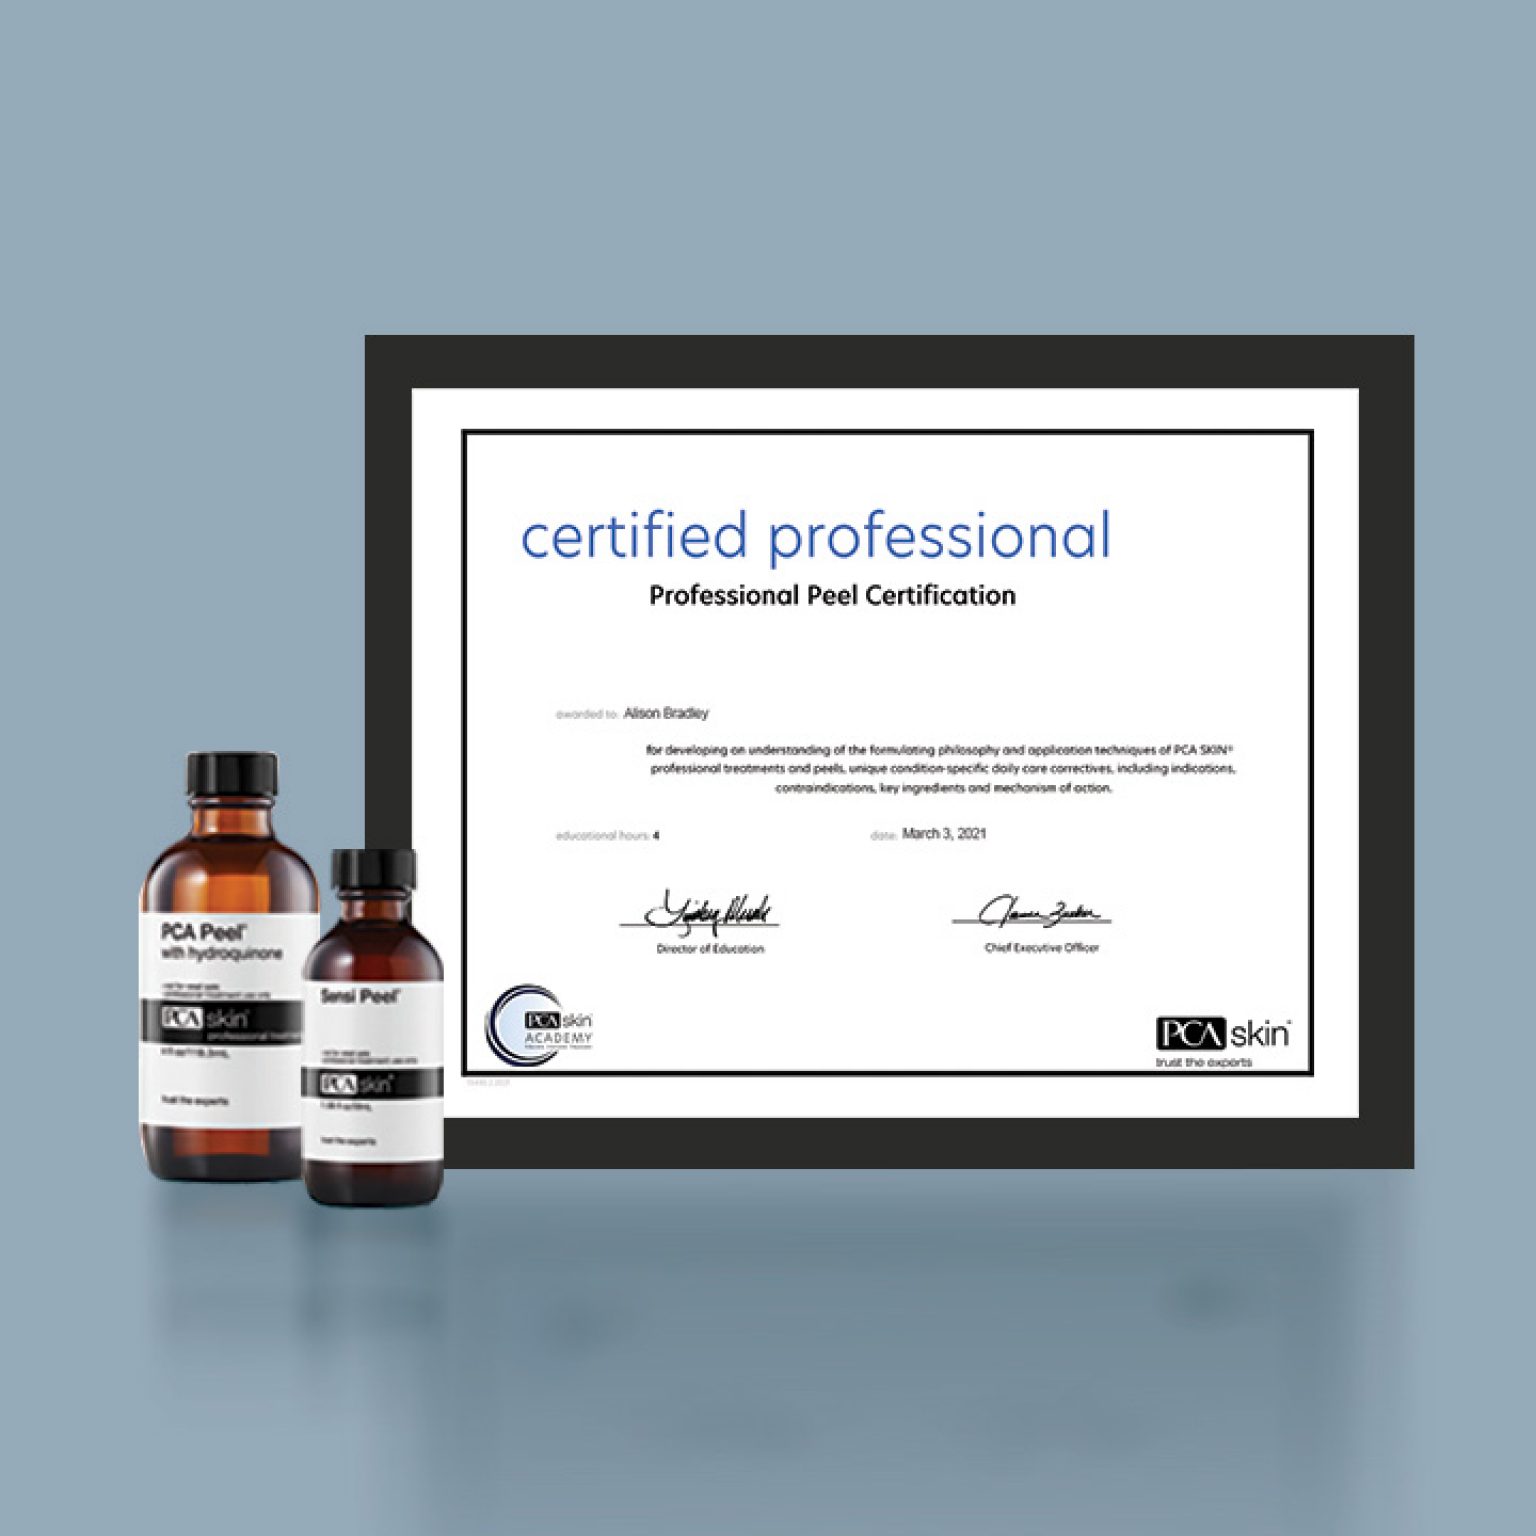 PCA SKIN Professional Peel Certification 2 0 pcaskinacademy com